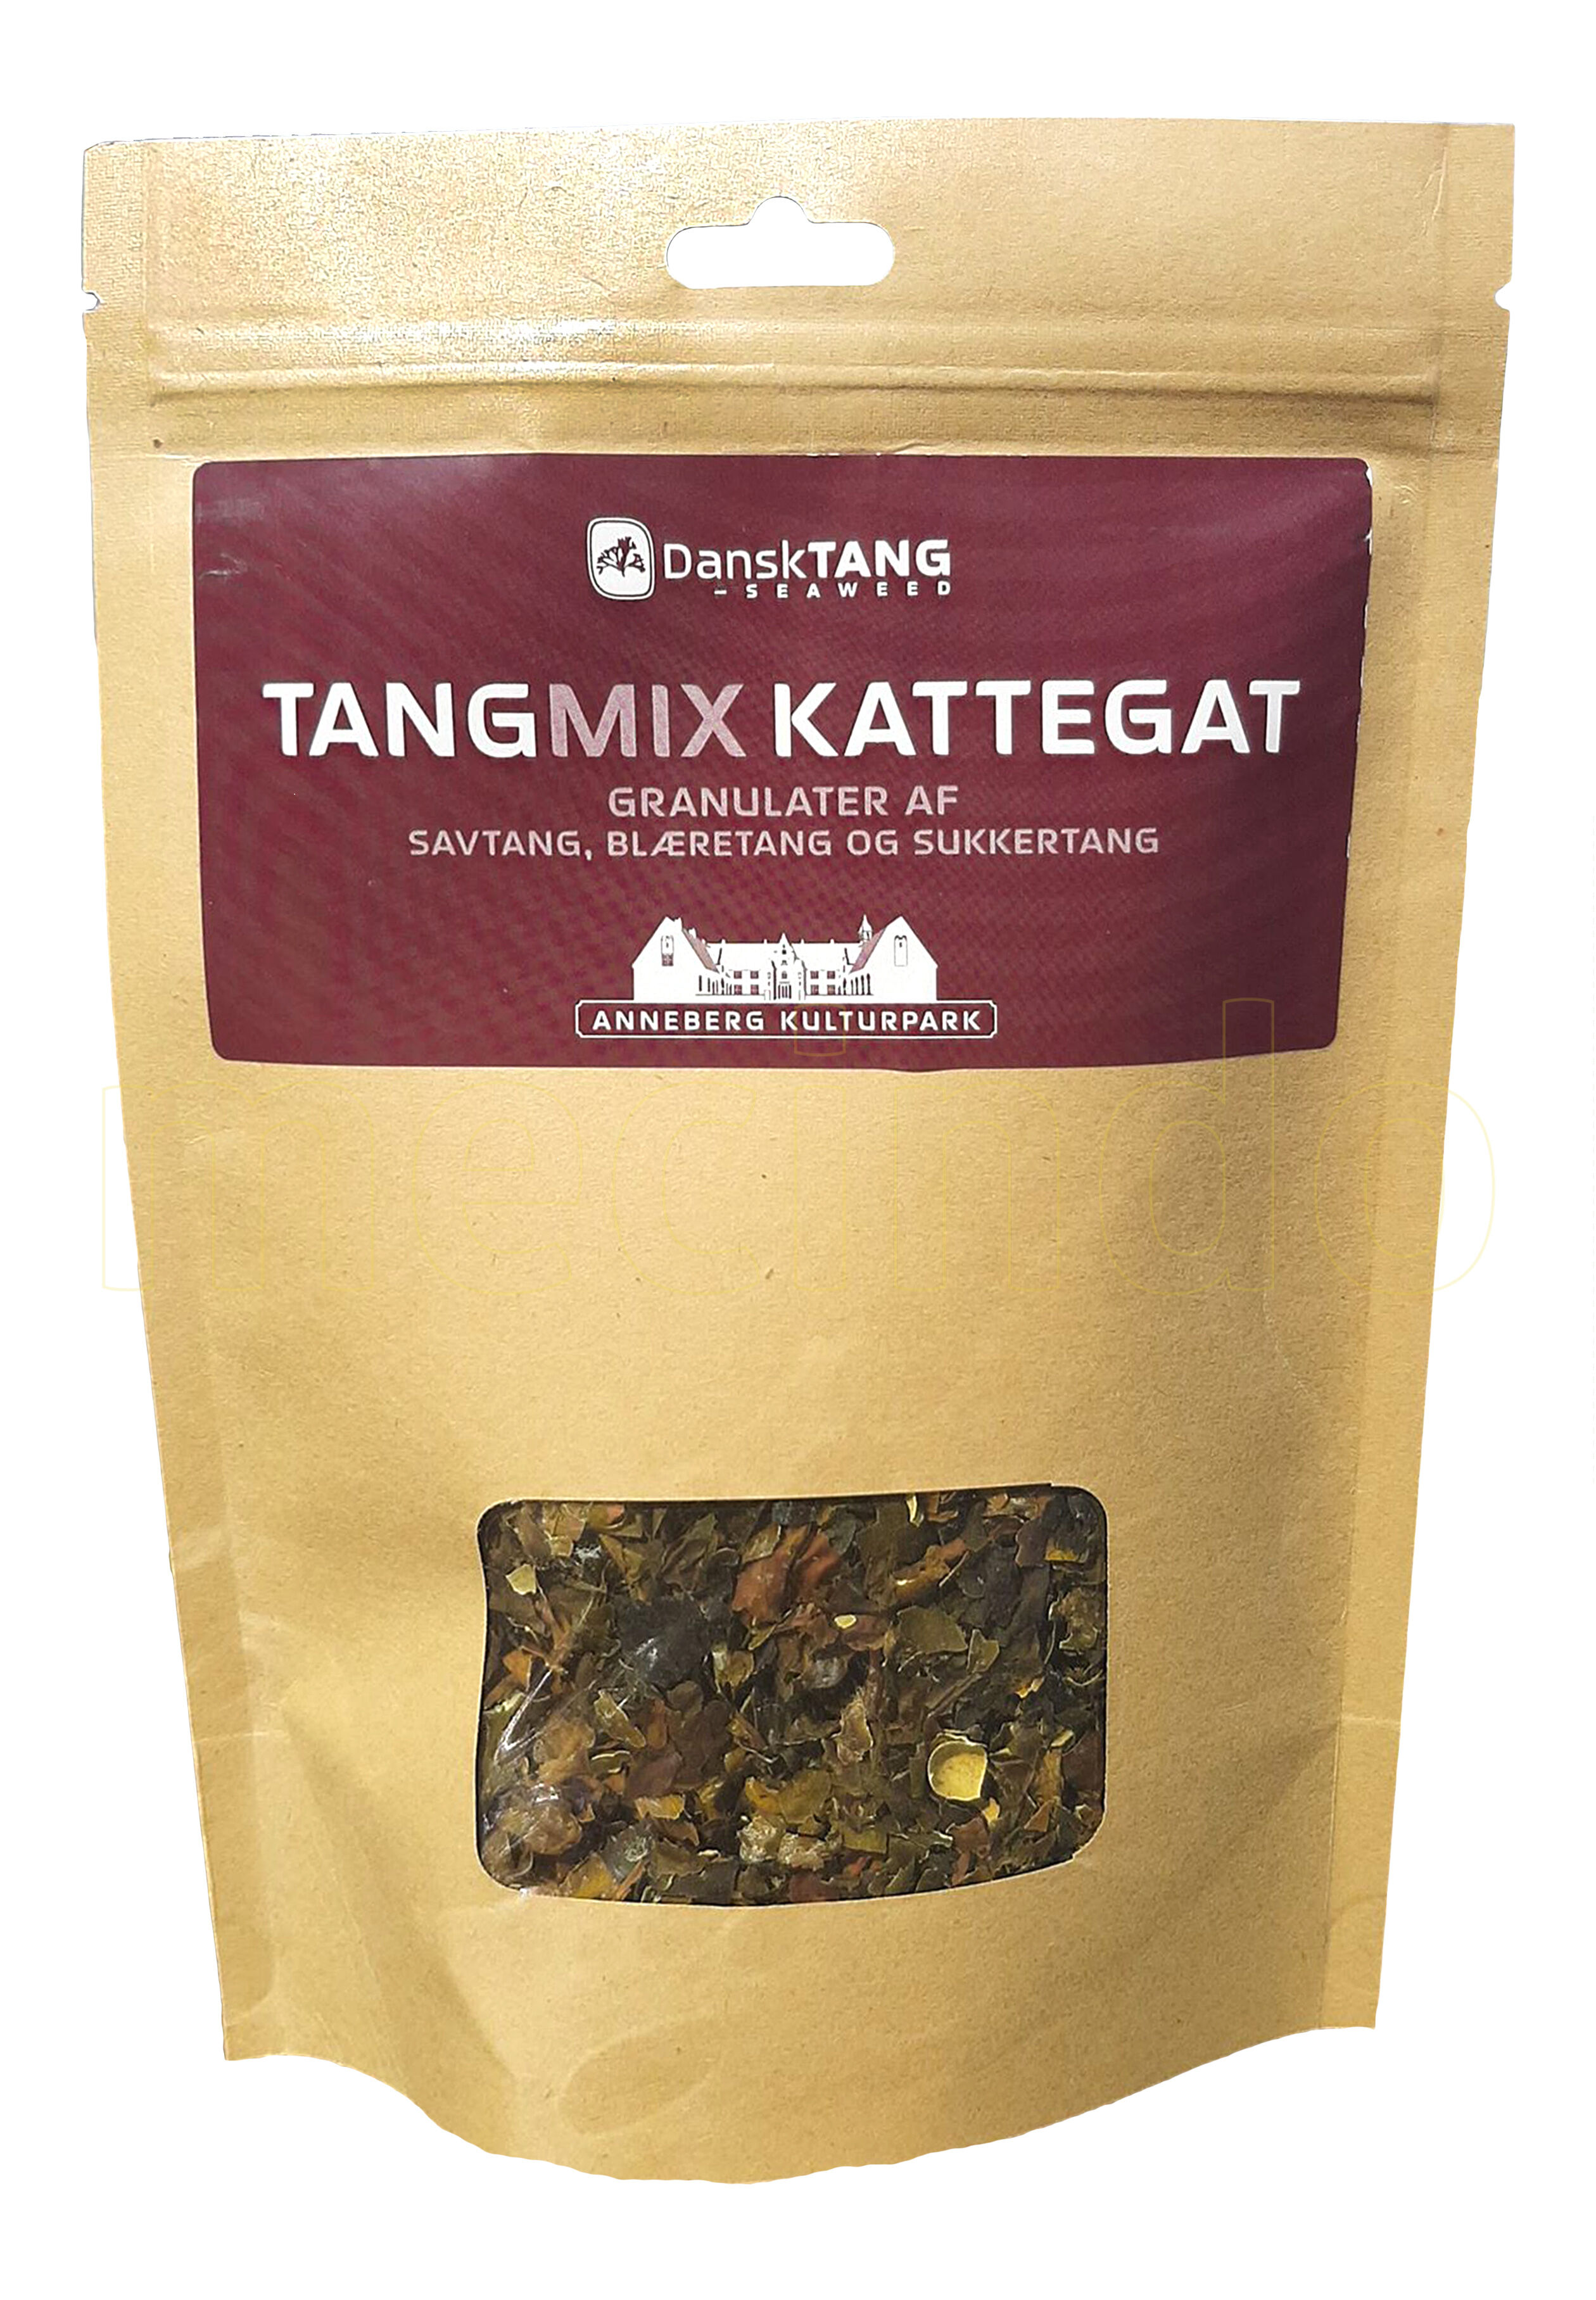 Dansk Tang Tang Mix Kattegat - 85 g